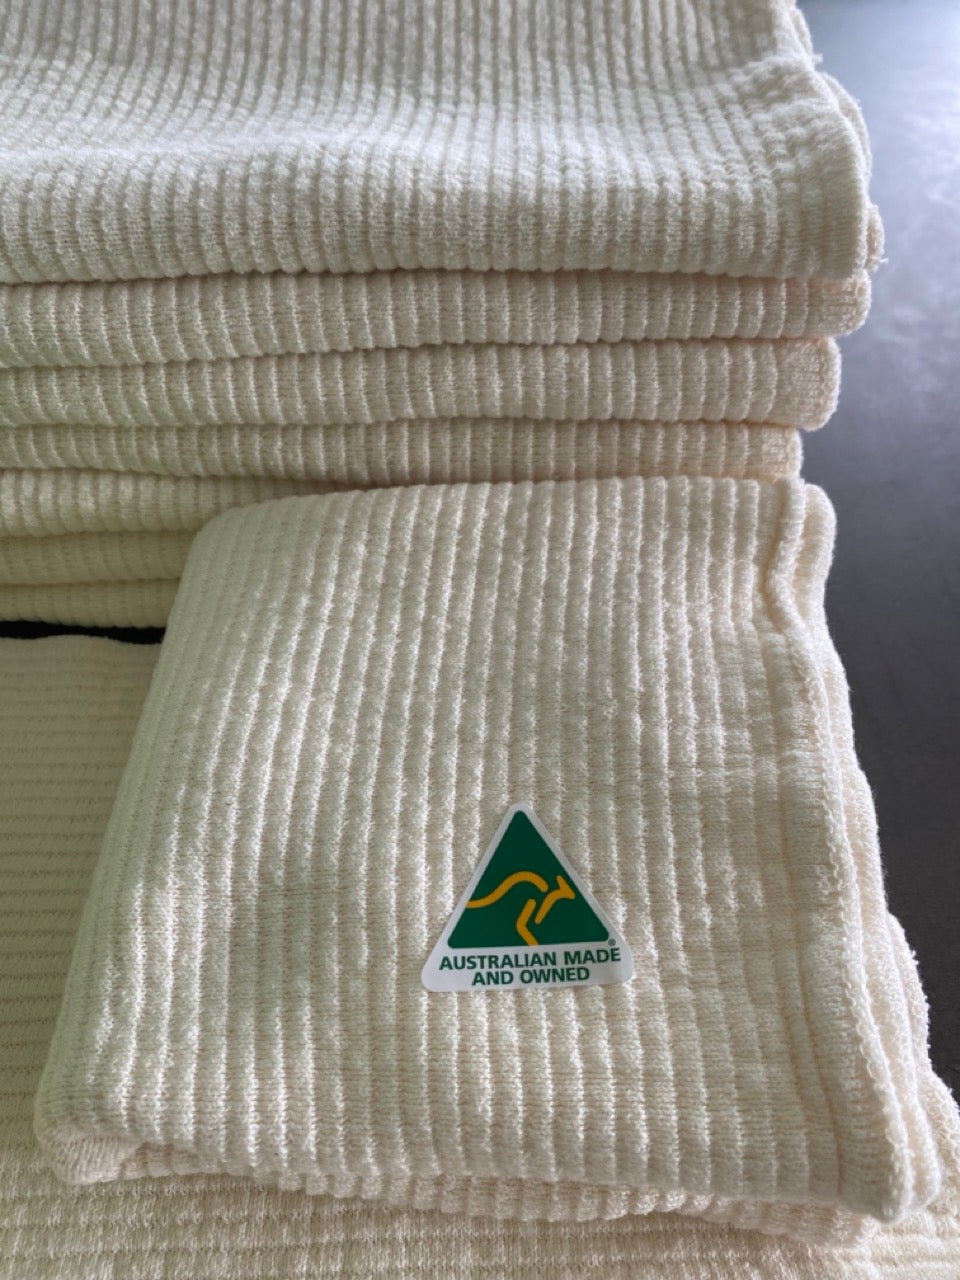 Cloth Nappies - Australian Made